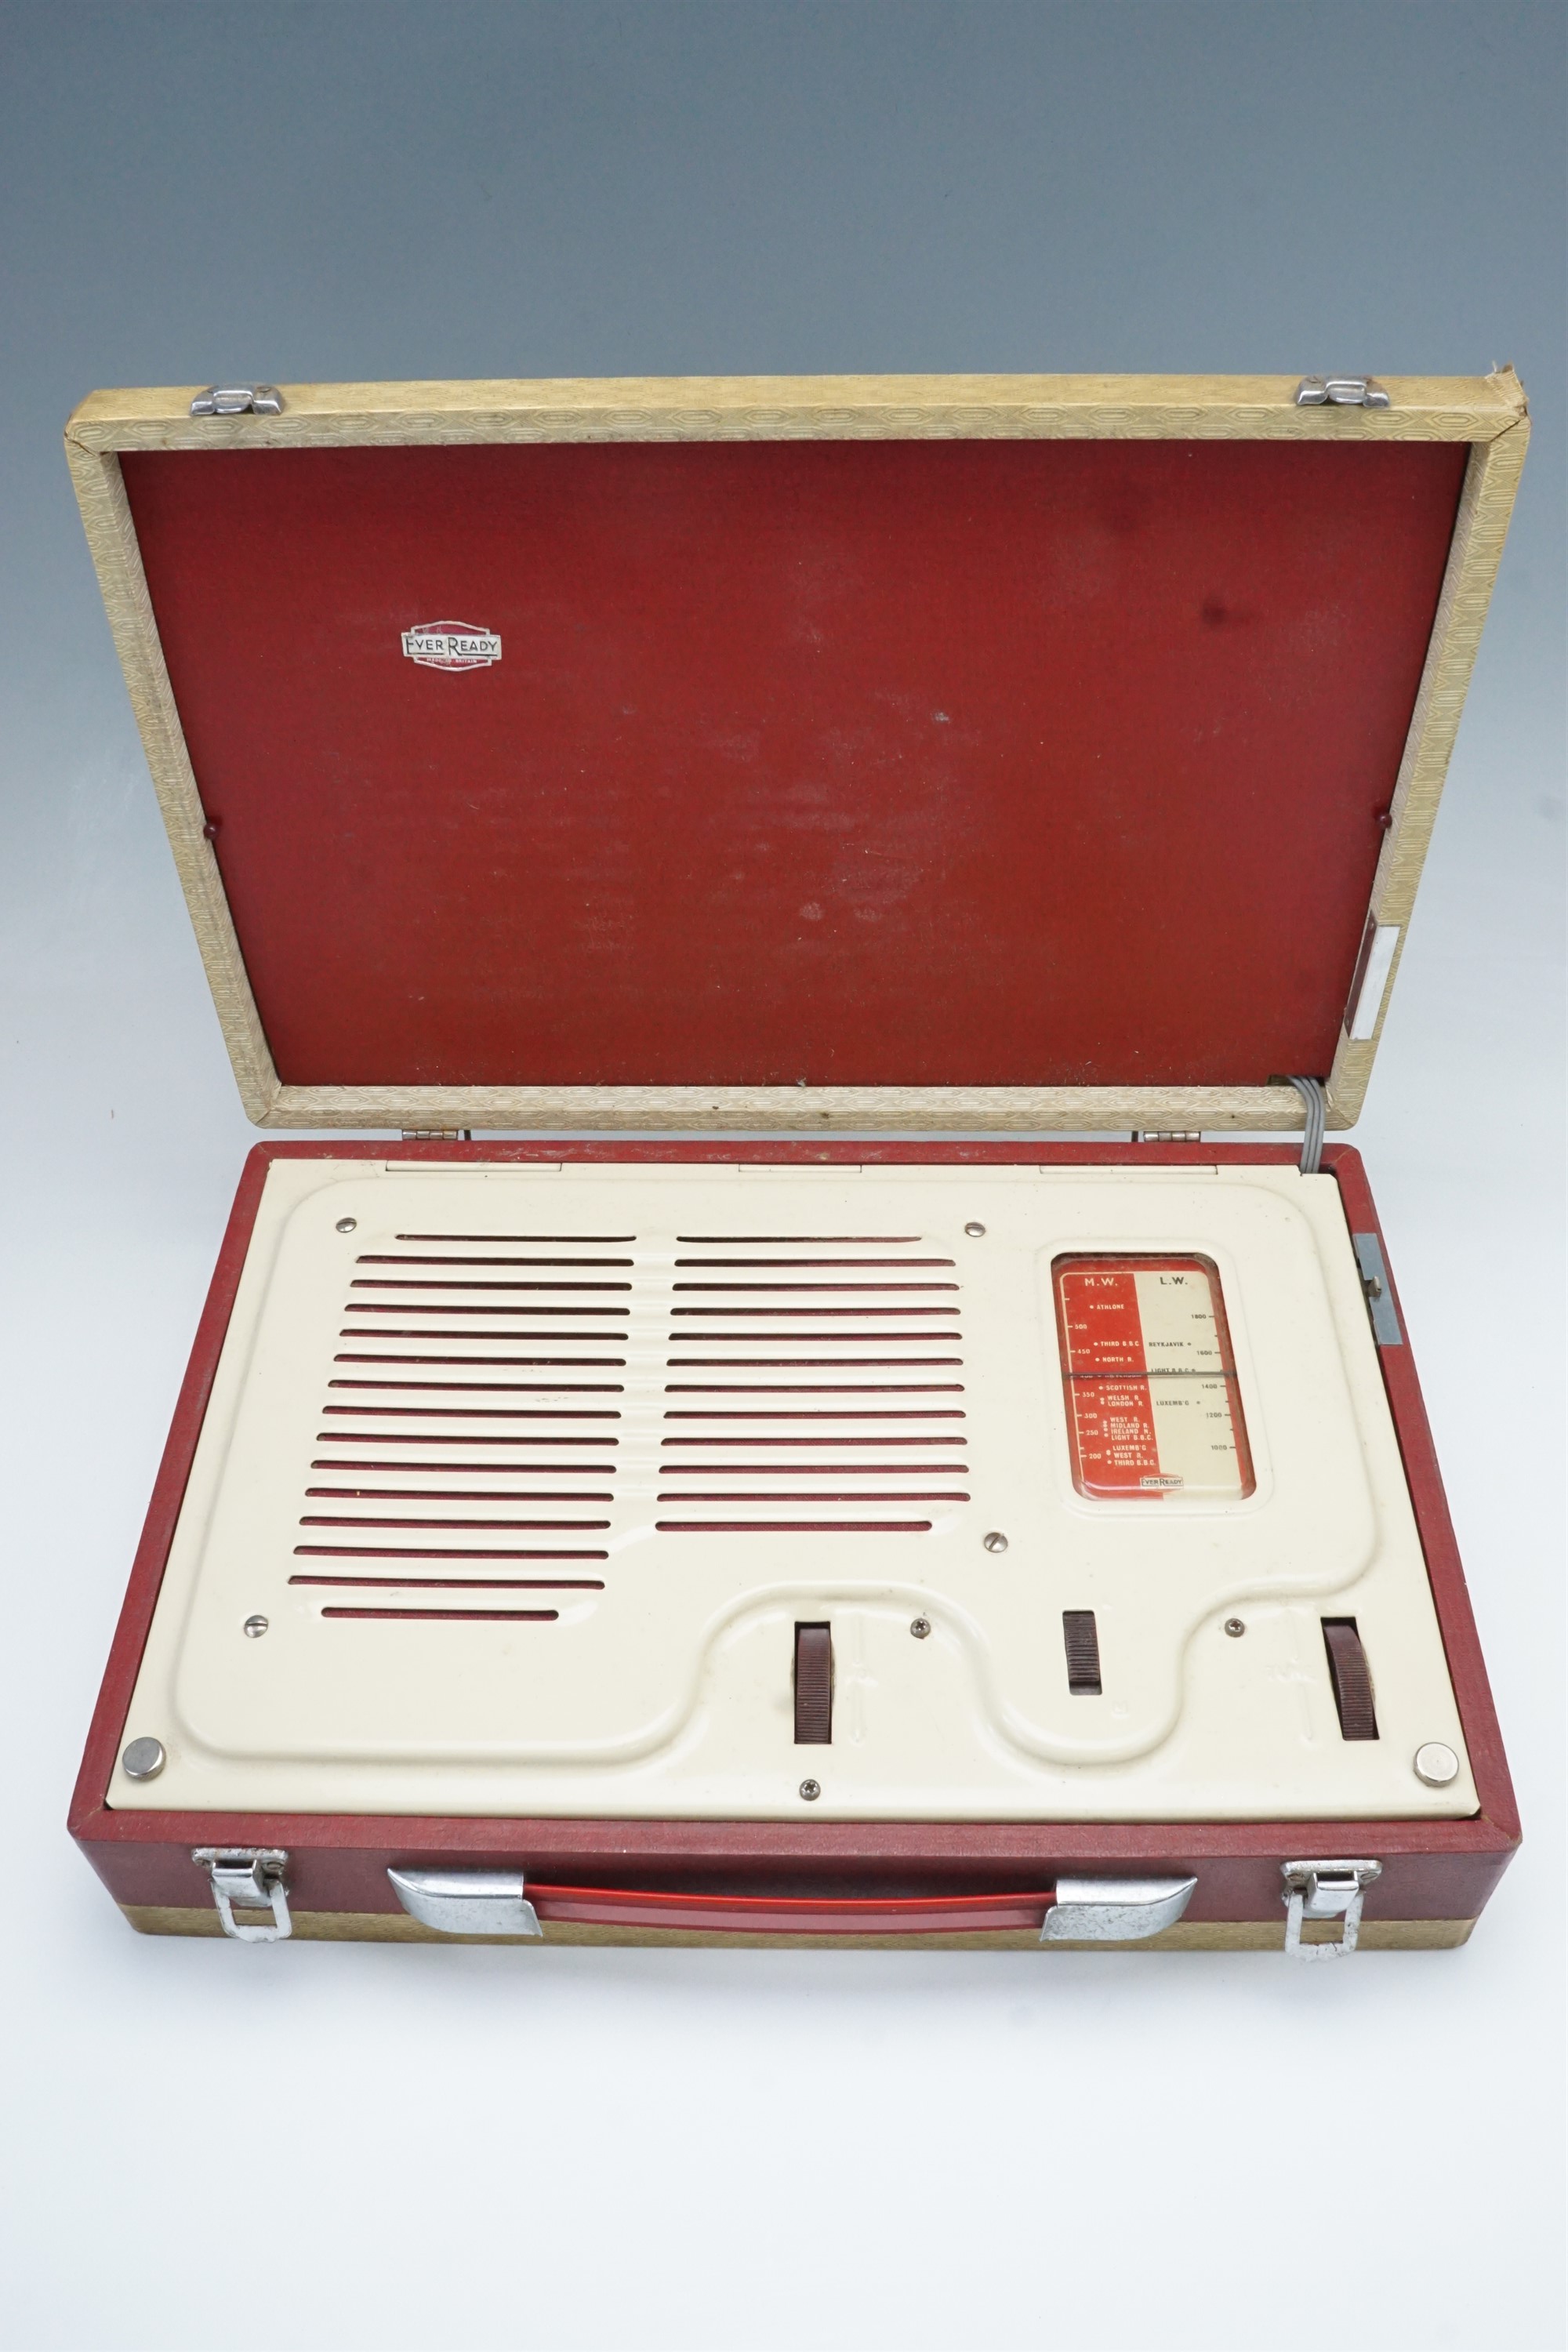 A vintage Eveready radio, 36 x 25 x 9 cm